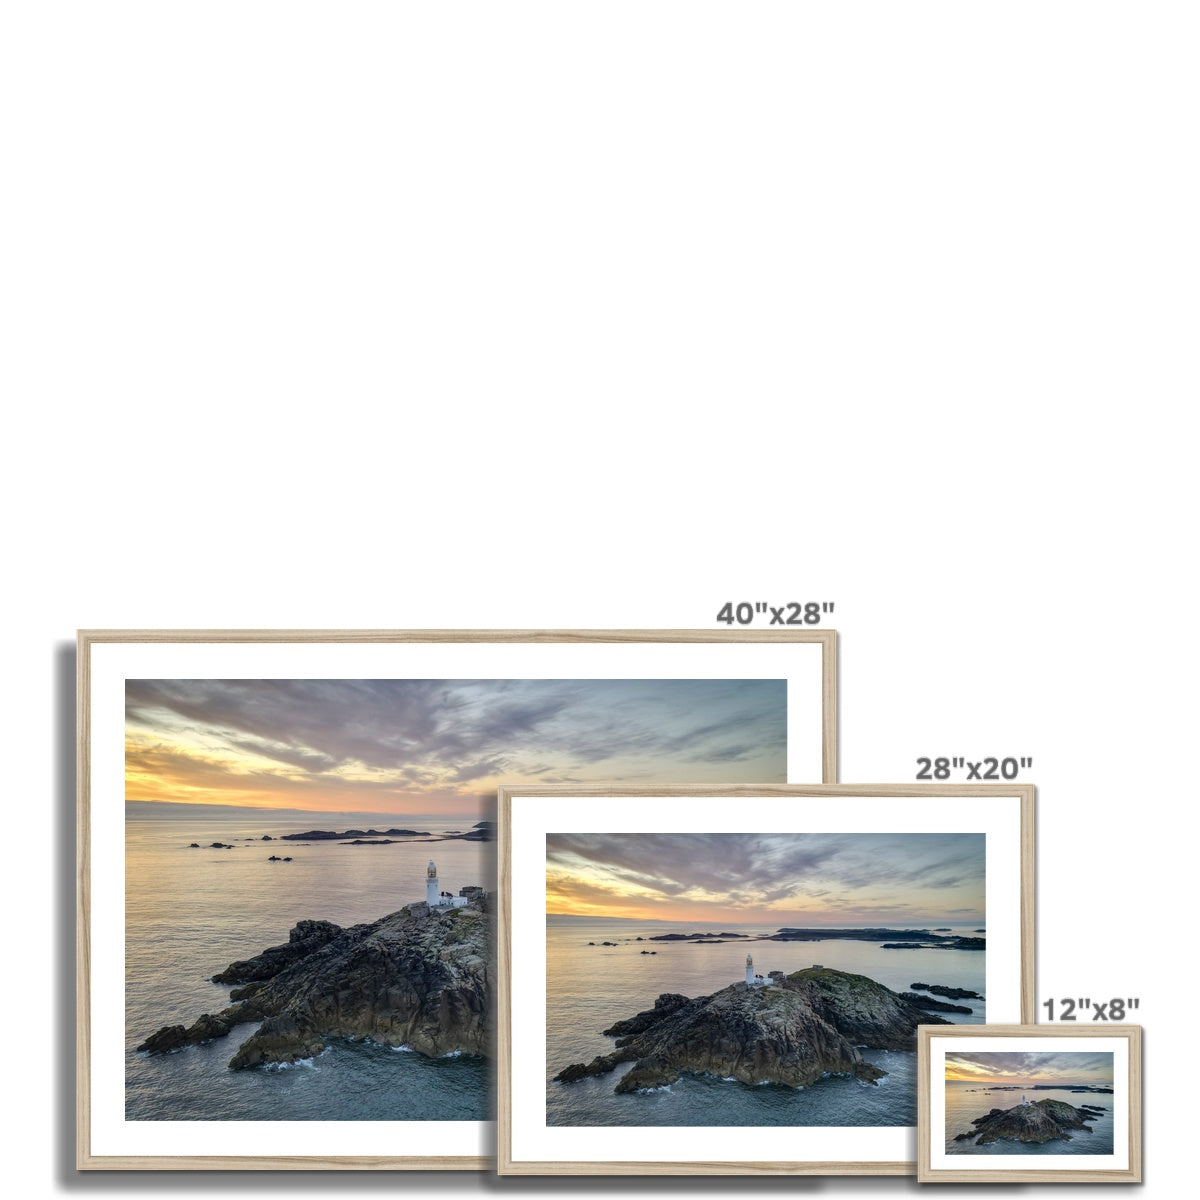 dawn round island framed photograph